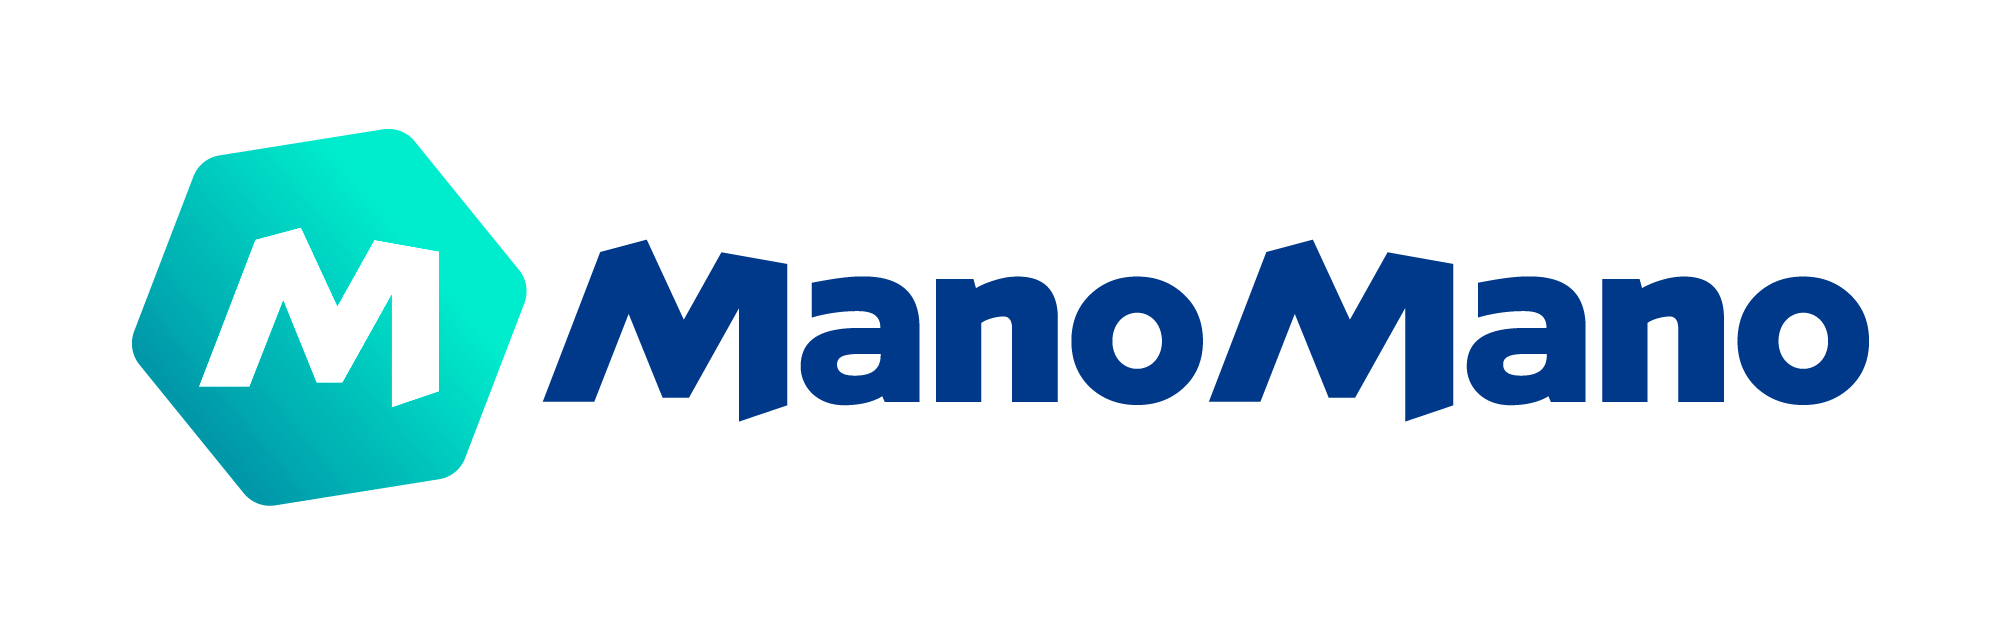 ManoMano_2018 (1)